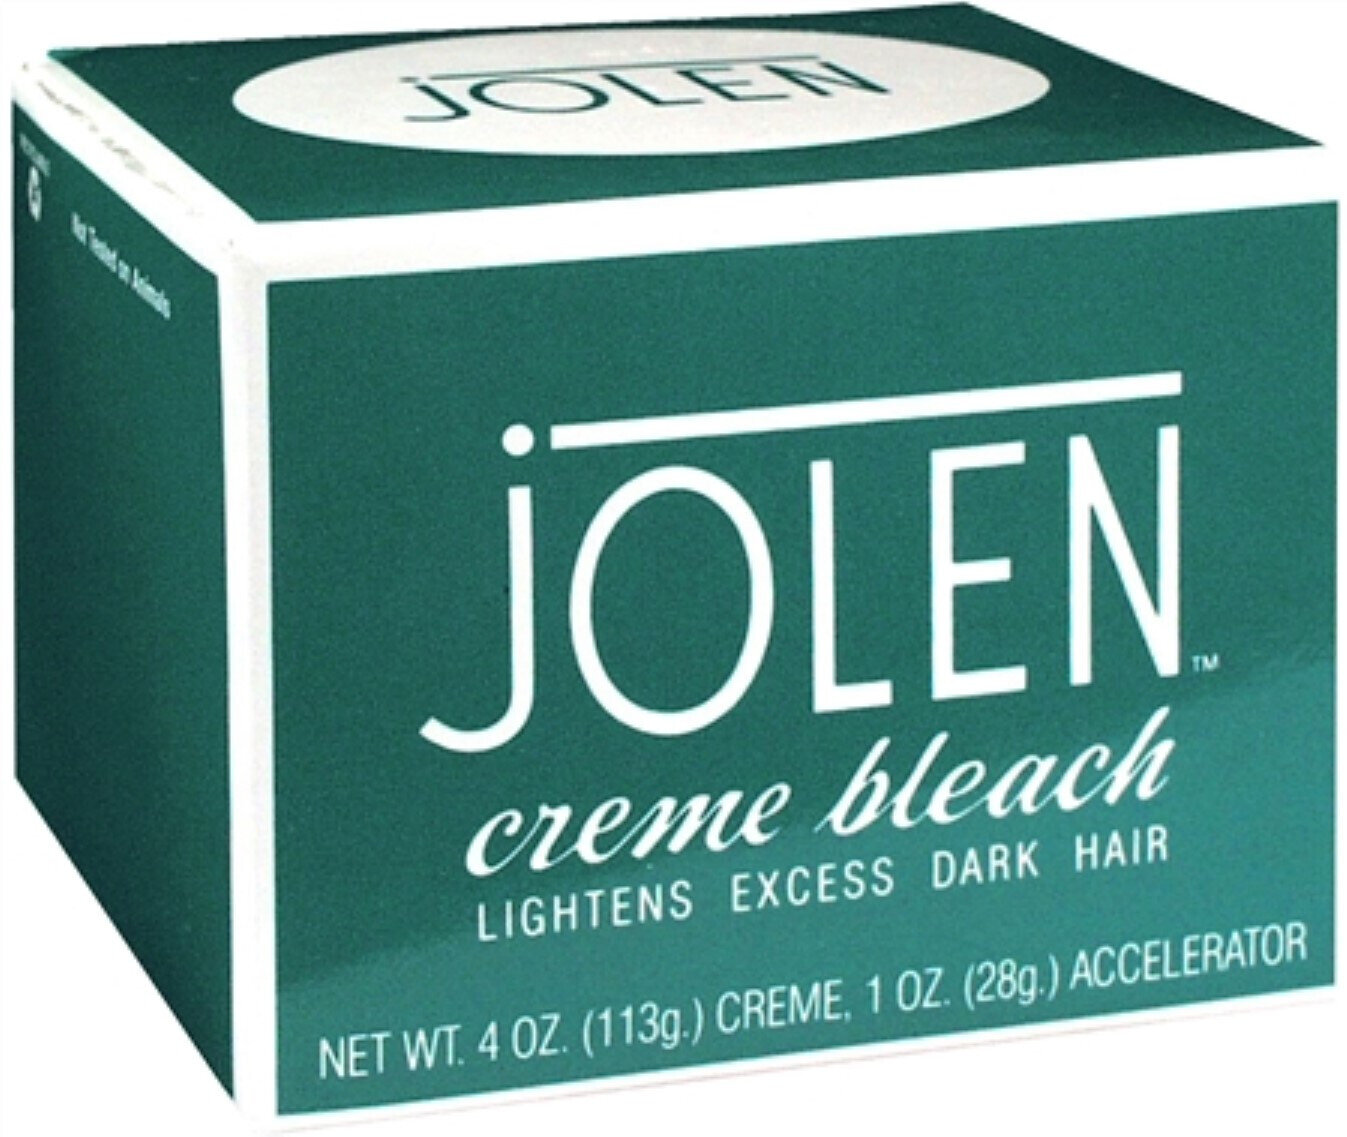 Jolen Creme Bleach Dark Hair Lightener Original Formula 4oz